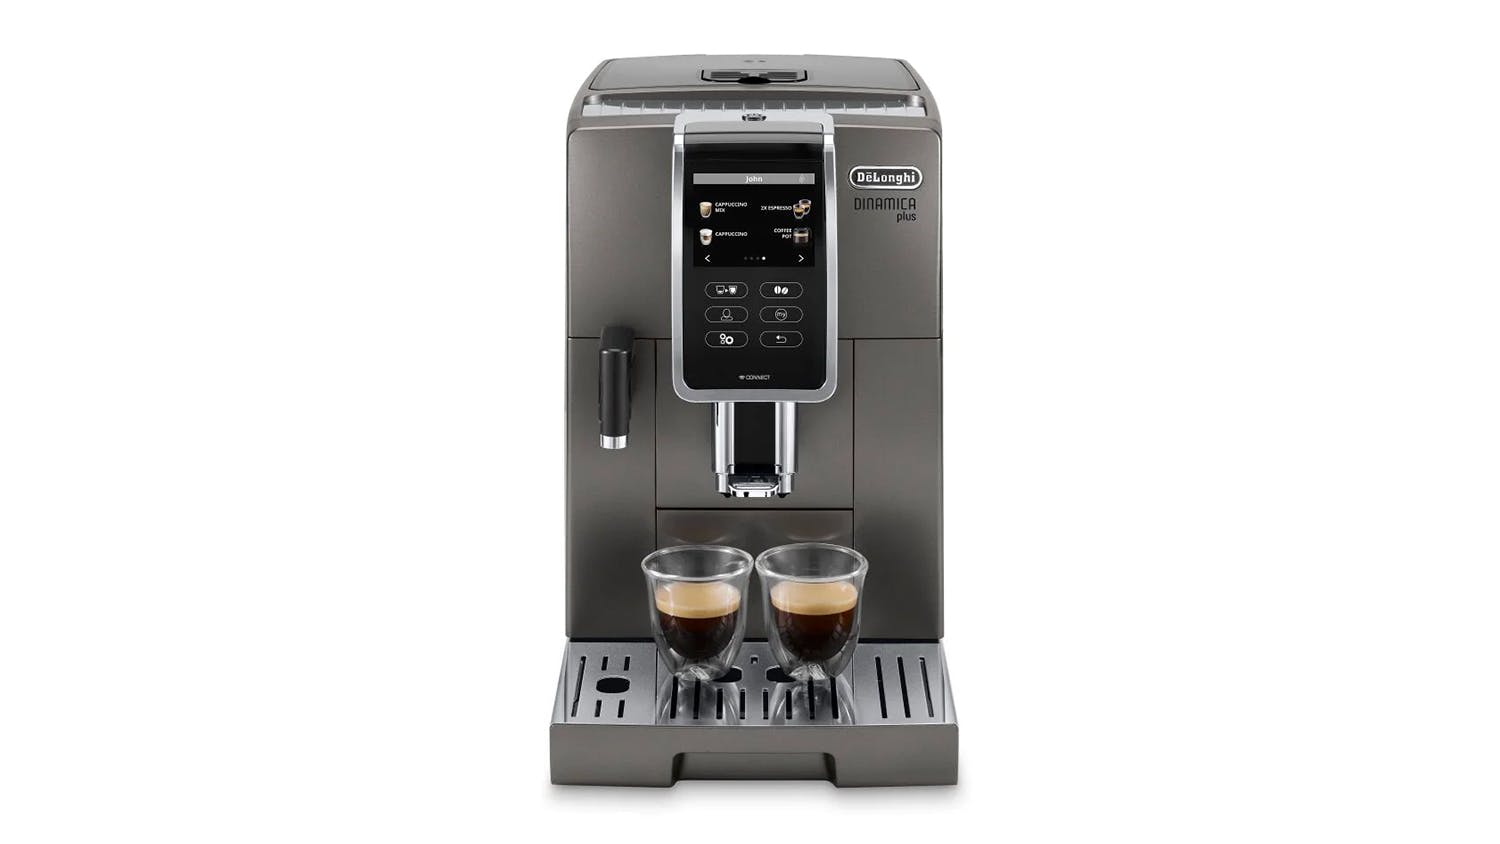 DeLonghi Dynamica Plus ECAM 370.95.T / Automatic Espresso Machine / NEW!